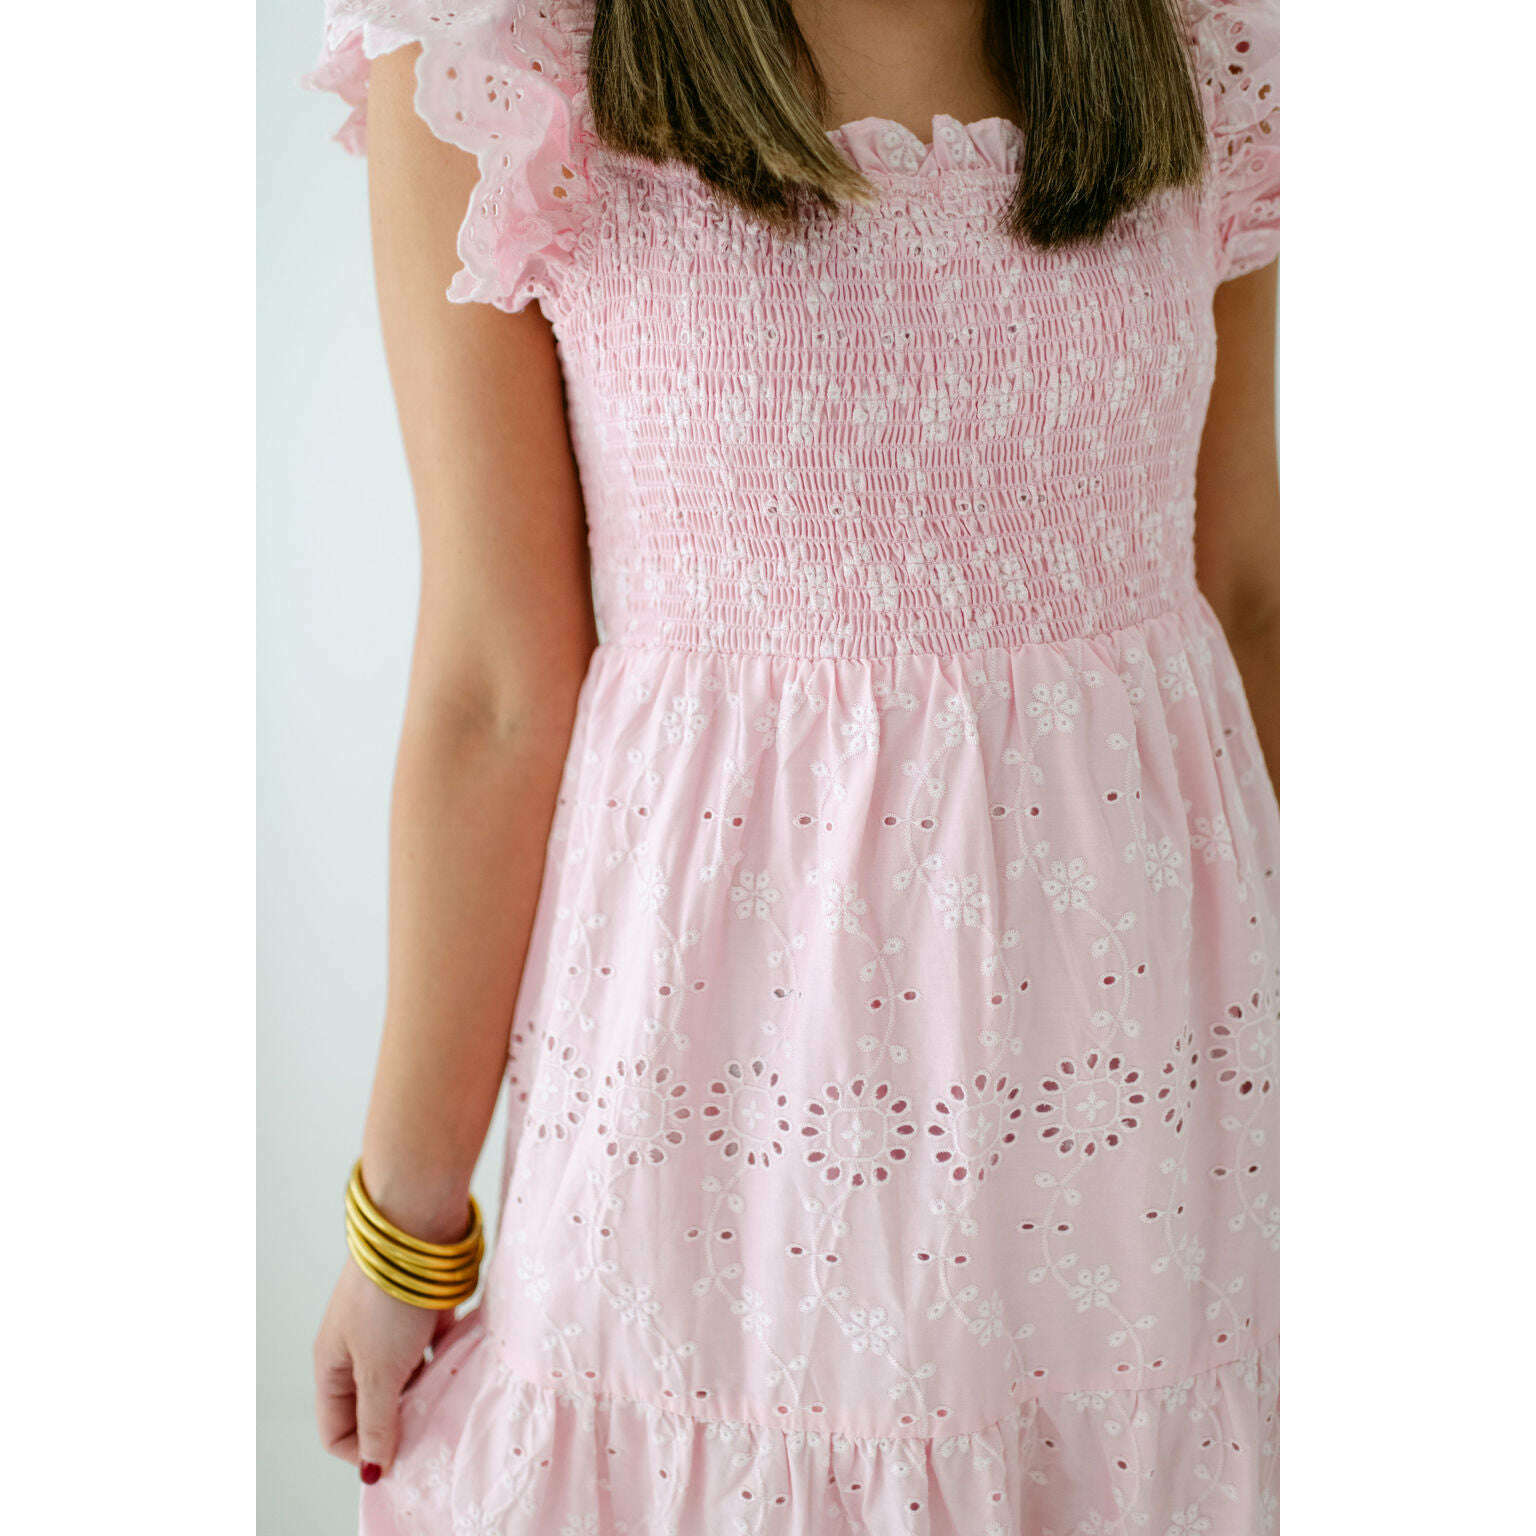 8.28 Boutique:Sail to Sable,Sail to Sable Candy Pink Eyelet Smocked Midi Dress,Dress